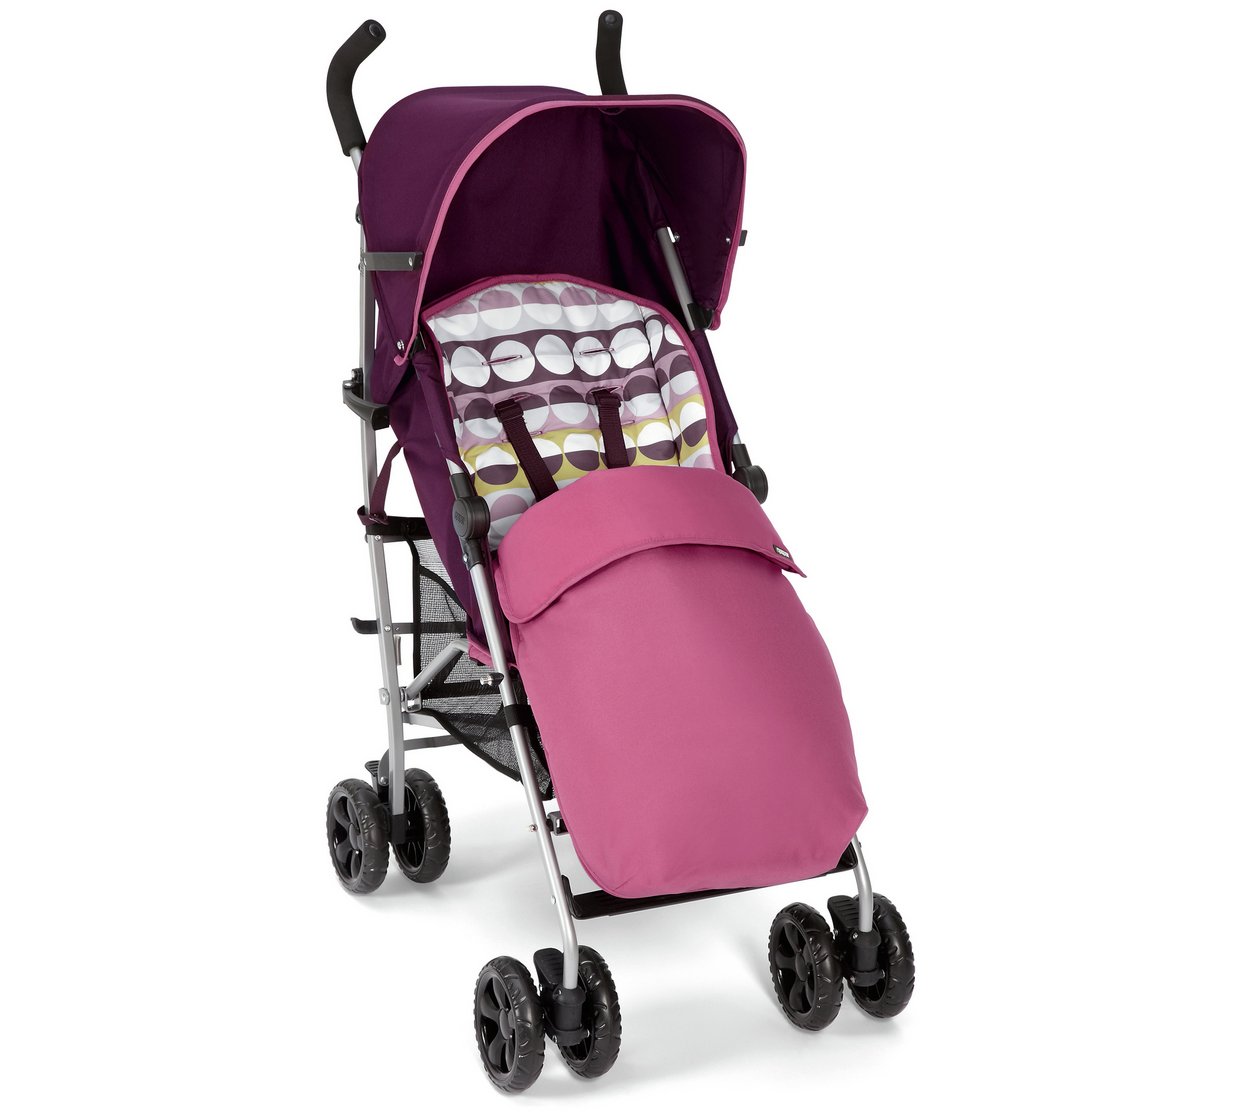 Mamas & Papas Swirl 2 Pushchair Package - £59.99 @ Argos - Smug Deals UK